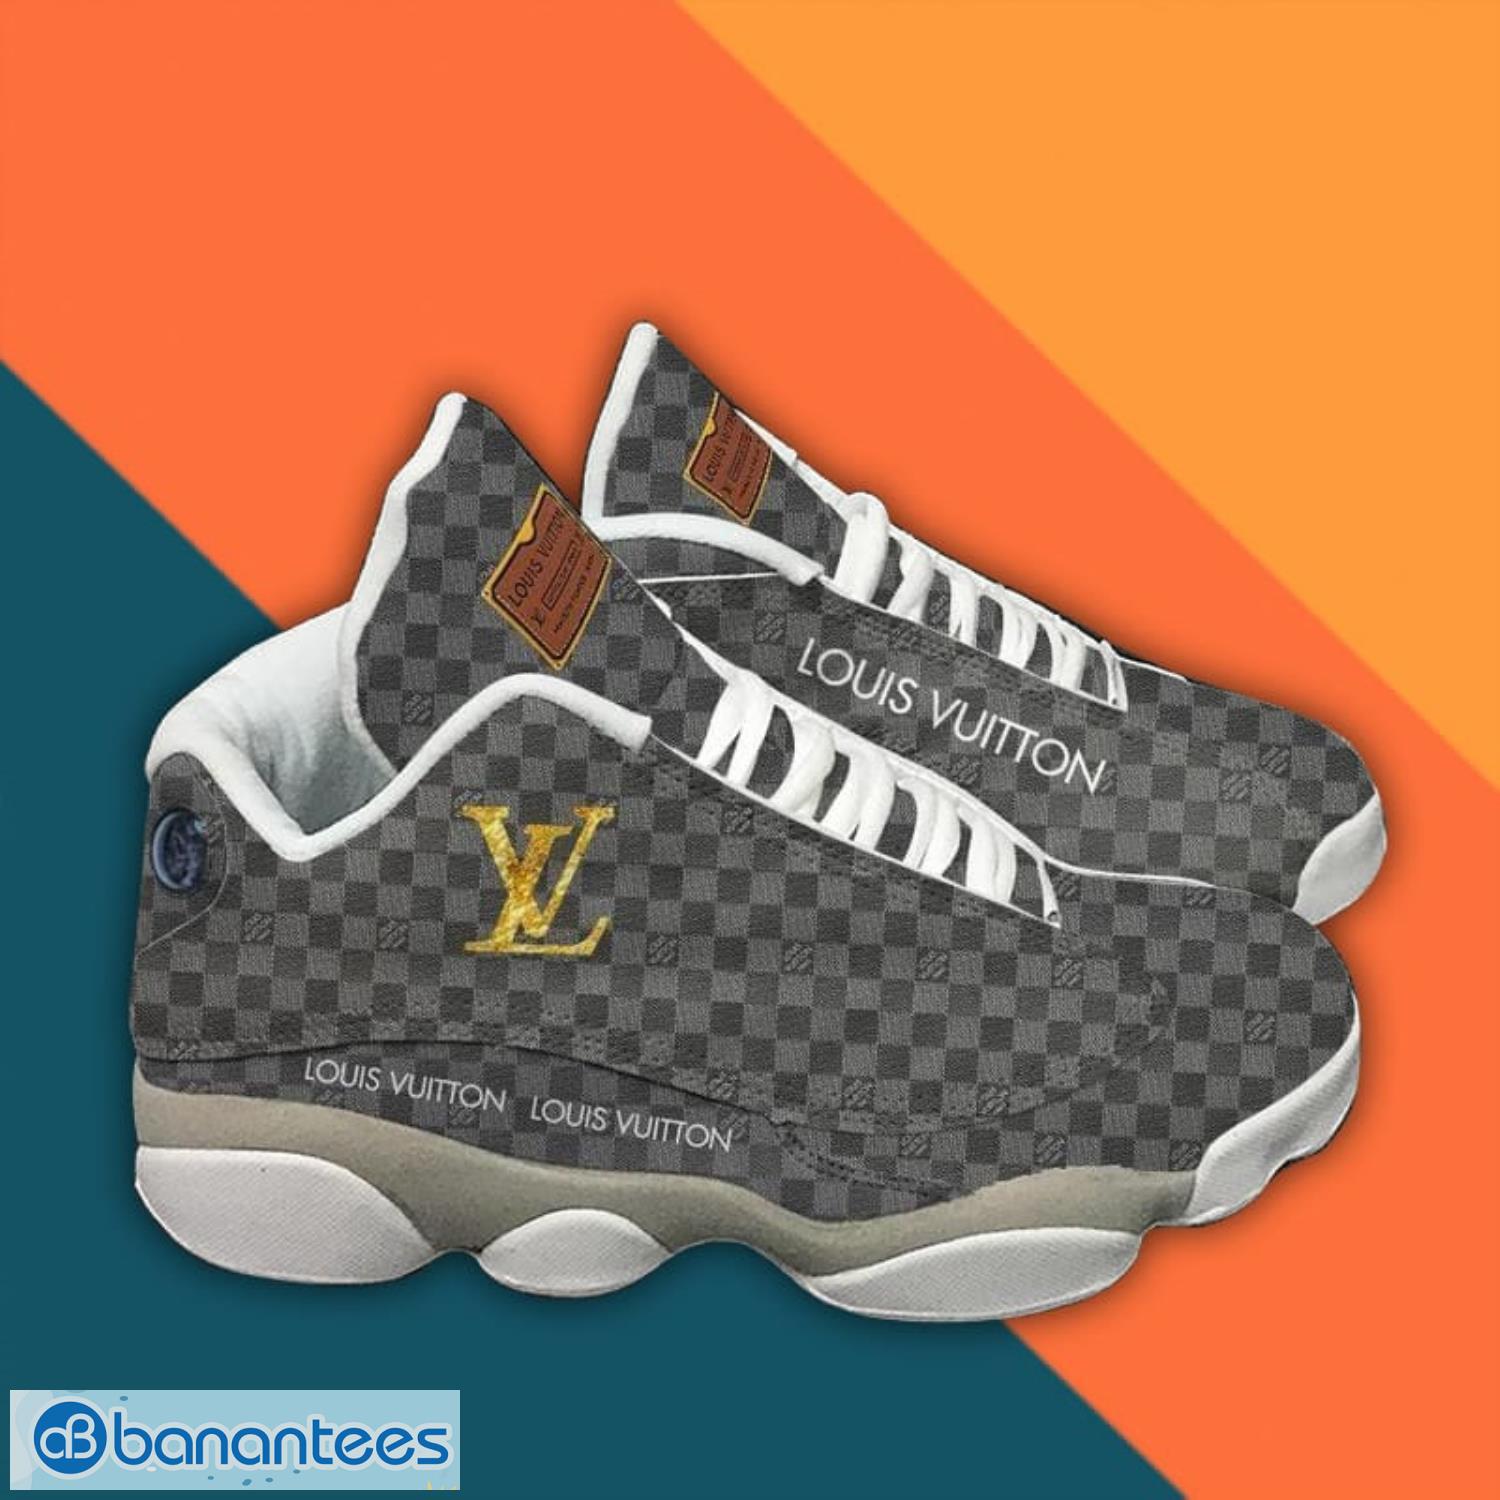 Louis Vuitton Luxury Brand Air Jordan 13 Sneaker Shoes Product Photo 1